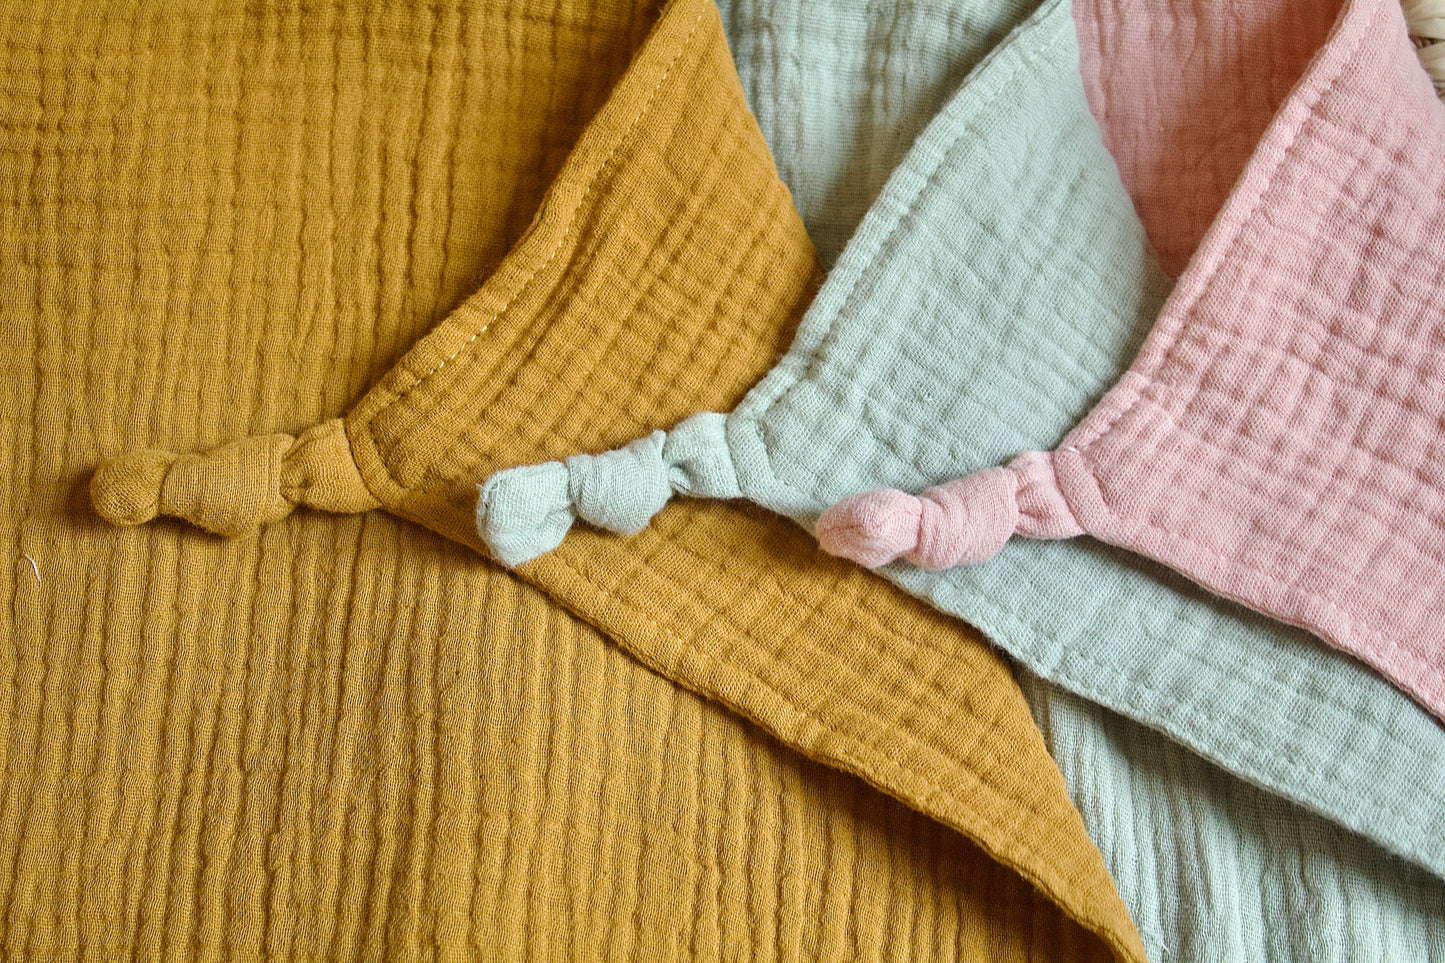 Soft Cotton Bunny Comforter